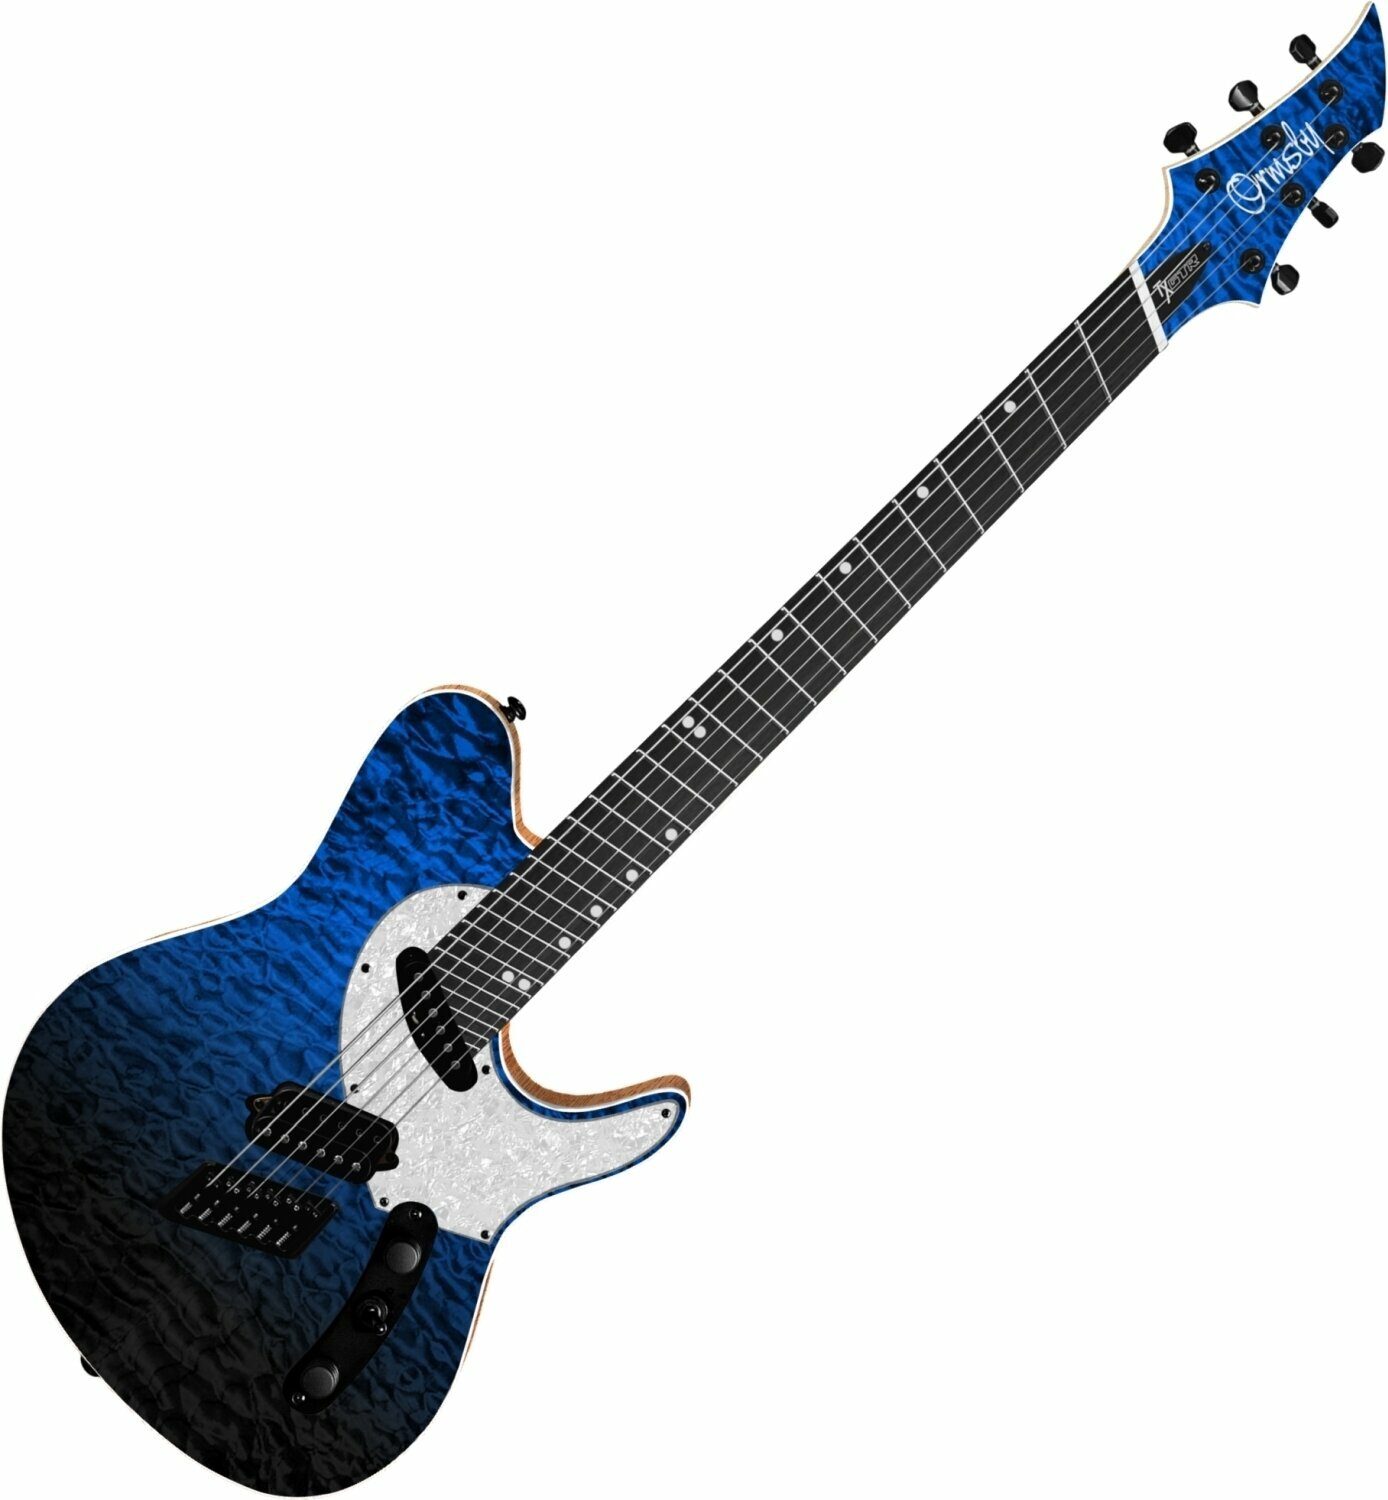 Elektryczna gitara multiscale Ormsby TX GTR Exotic 6 EU Sky Fall